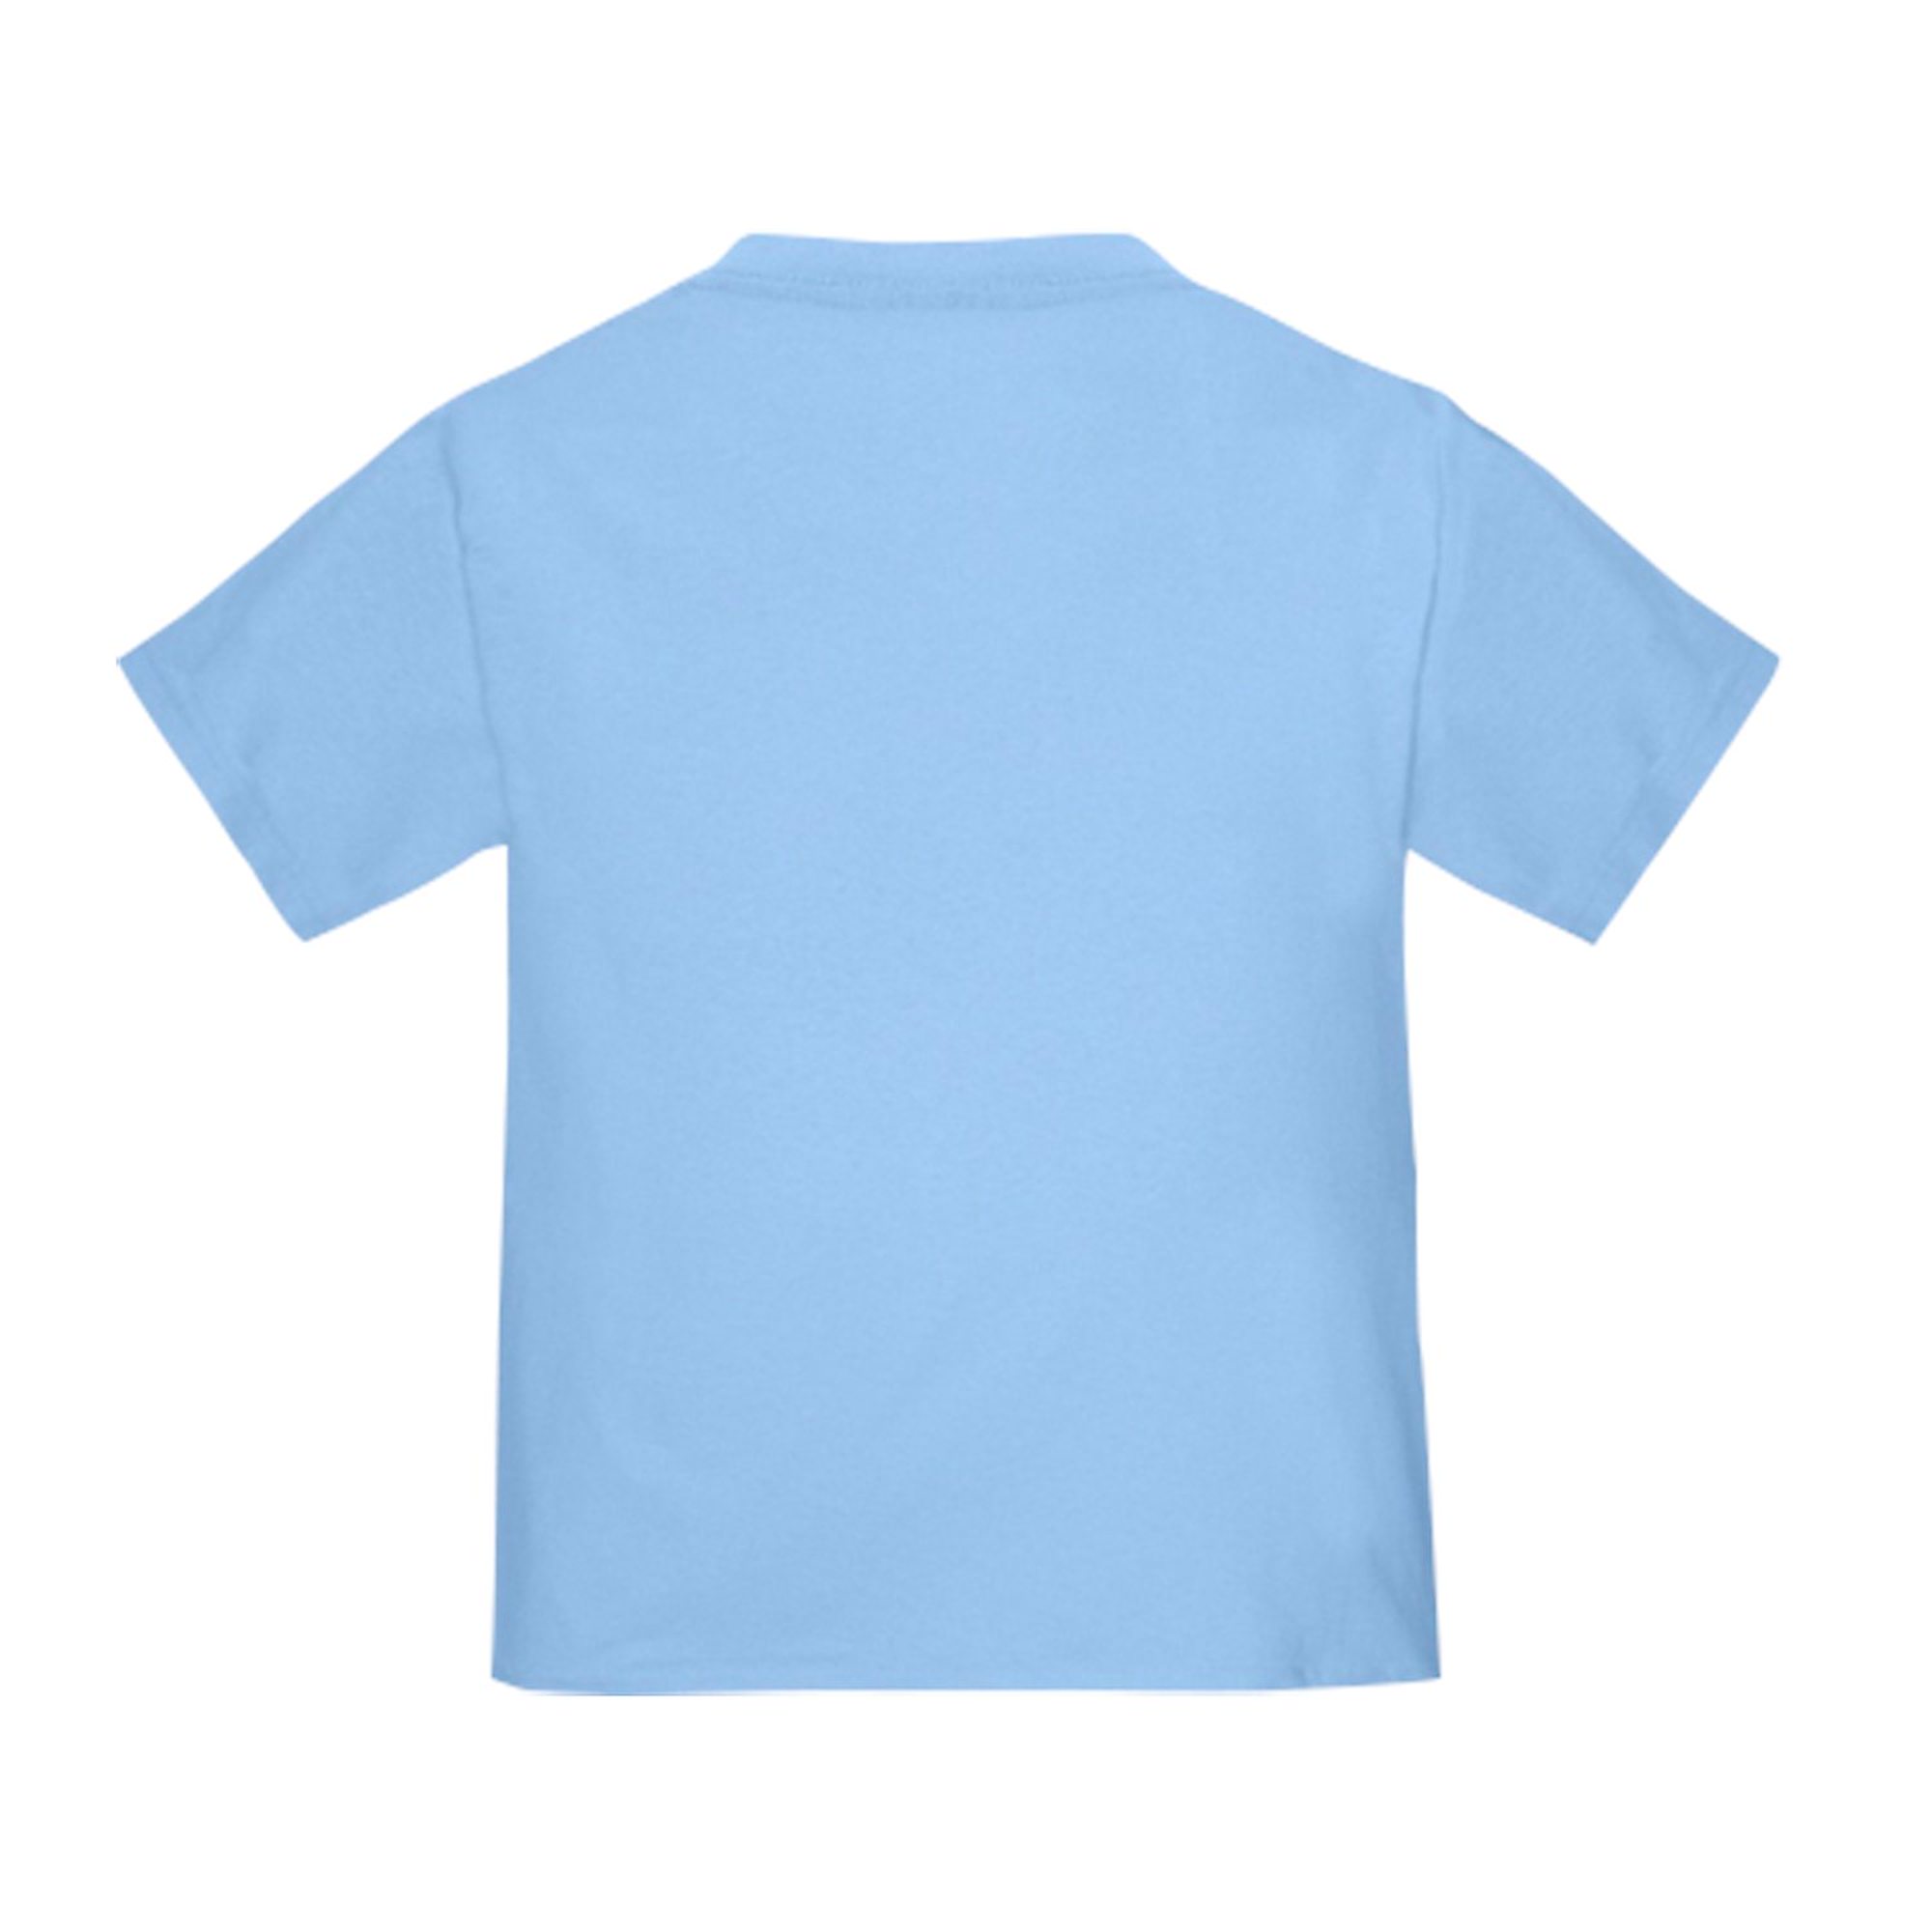 CafePress - I Heart My Nana And Pop Pop T Shirt - Cute Toddler T-Shirt, 100% Cotton - image 2 of 4